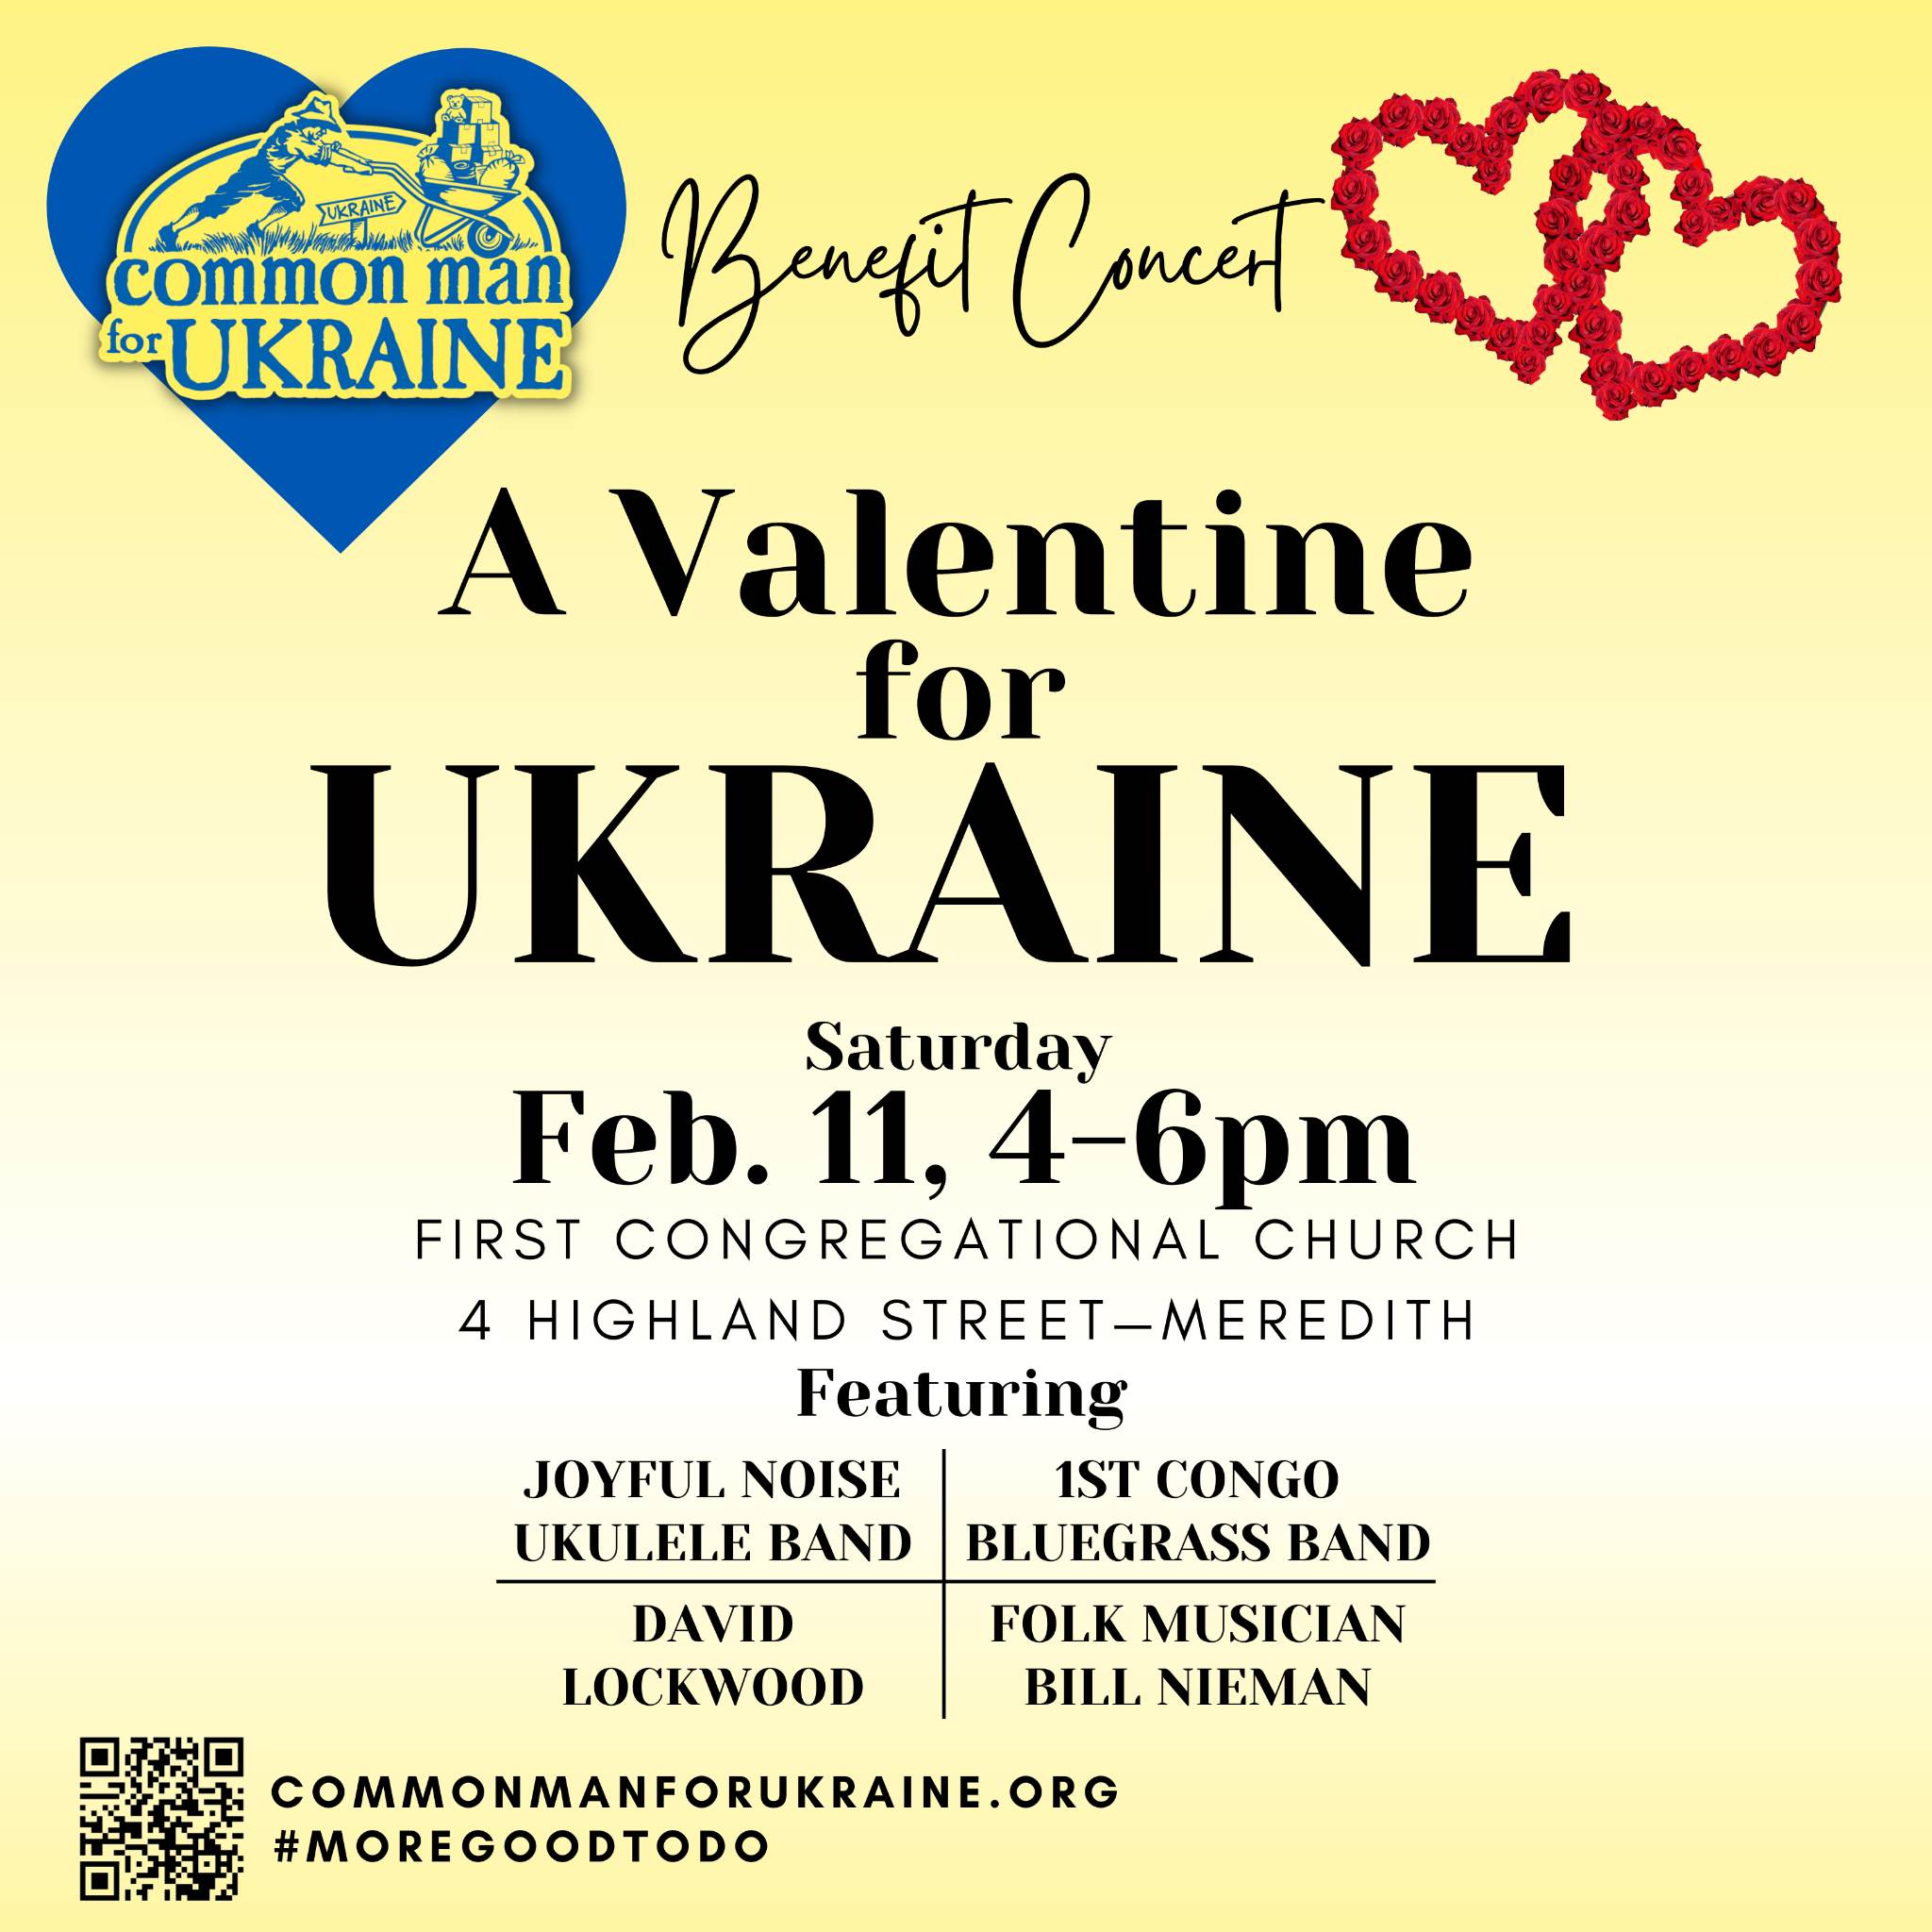 Benefit Concert - A Valentine for UKRAINE